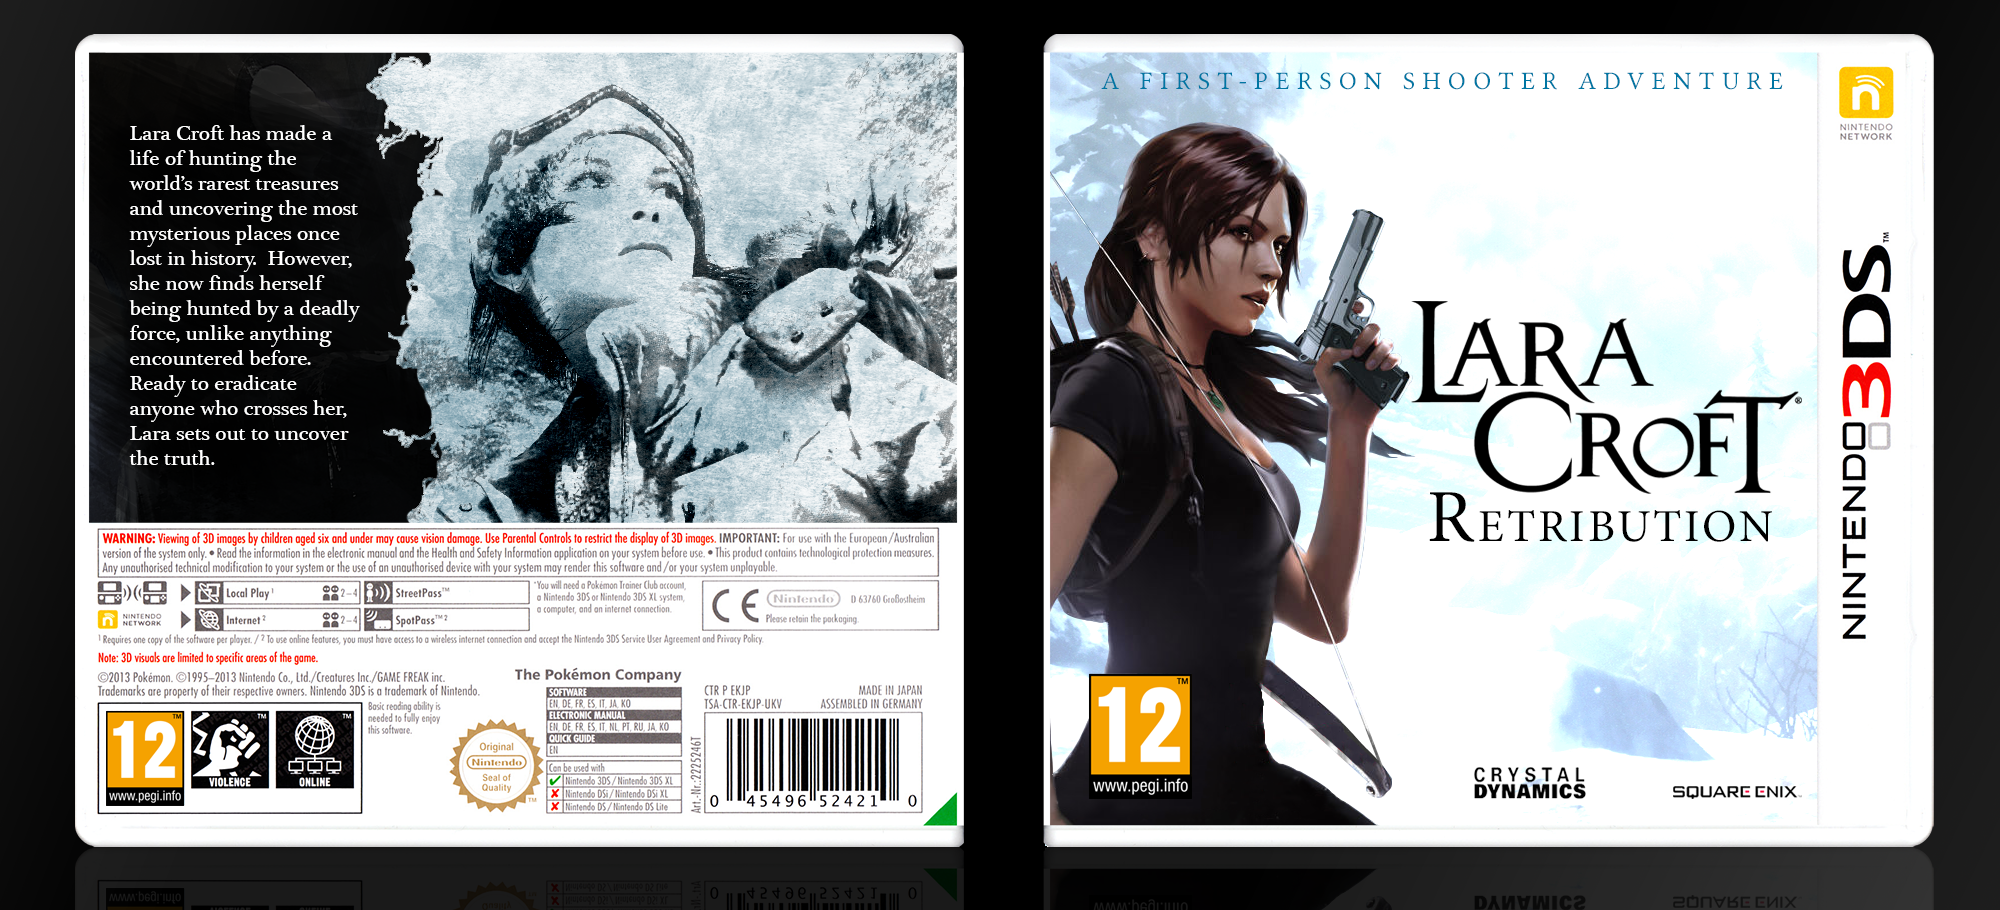 Lara Croft: Retribution box cover